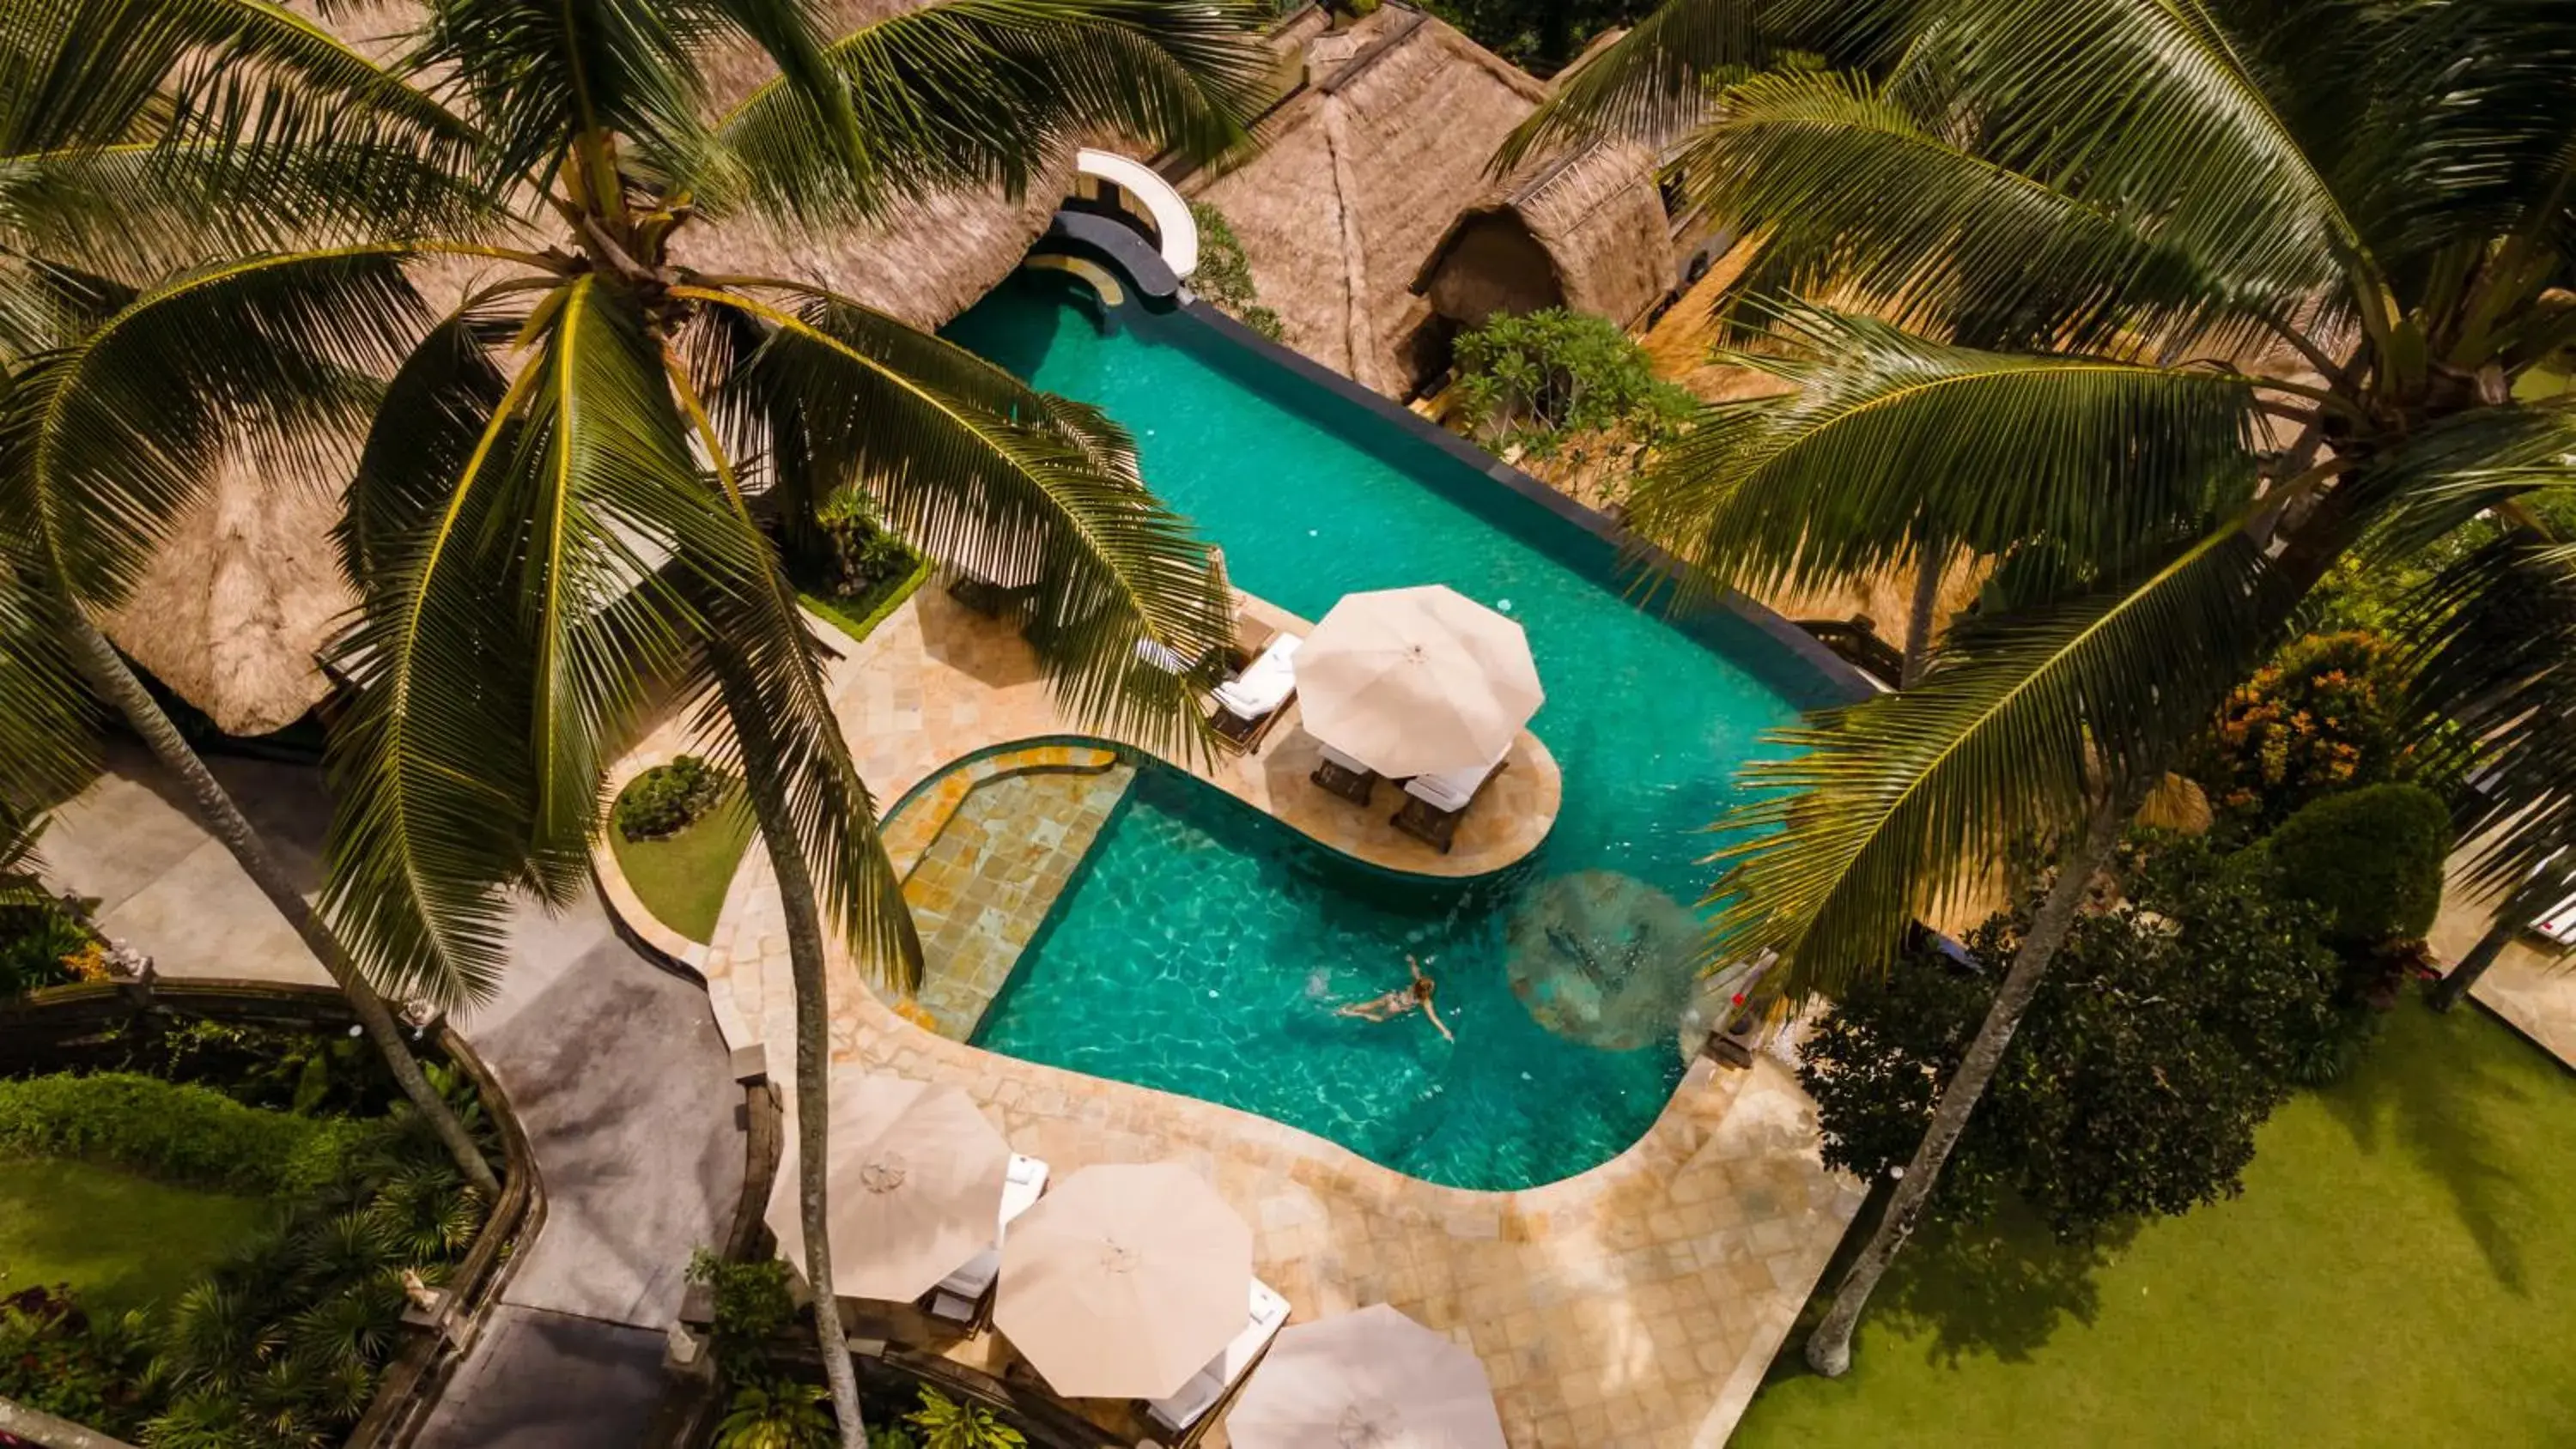 Pool View in Viceroy Bali